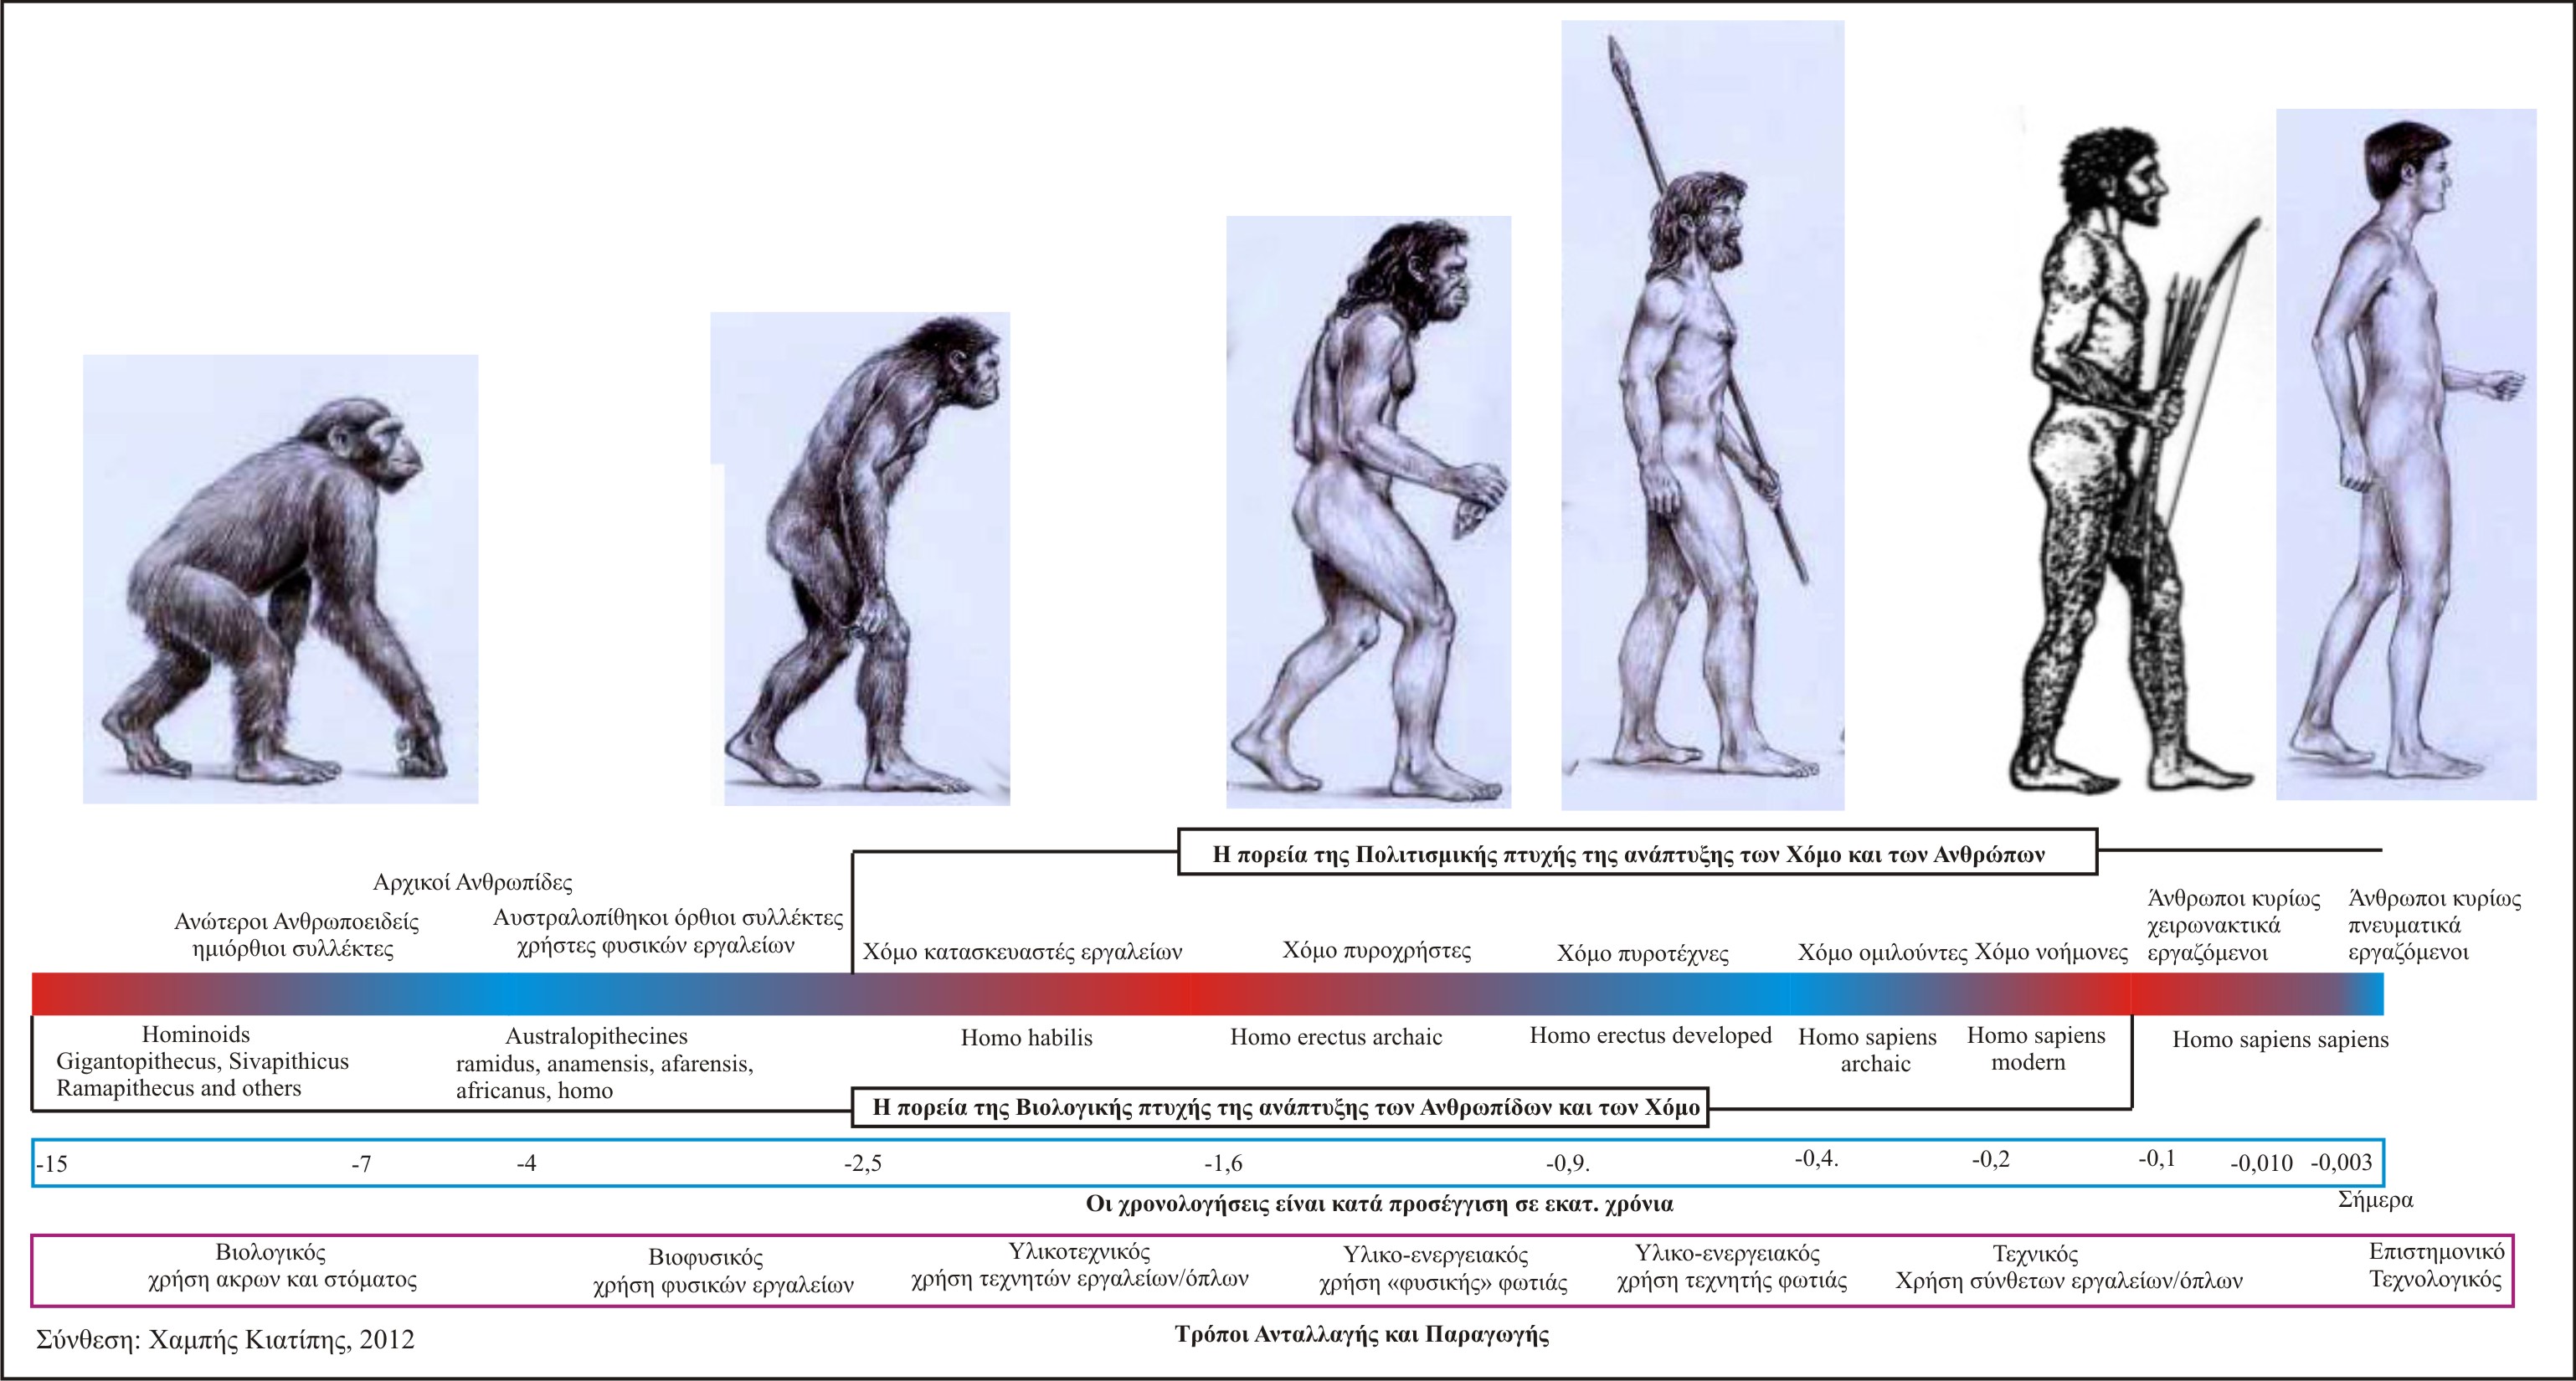 Primate Evolution Chart